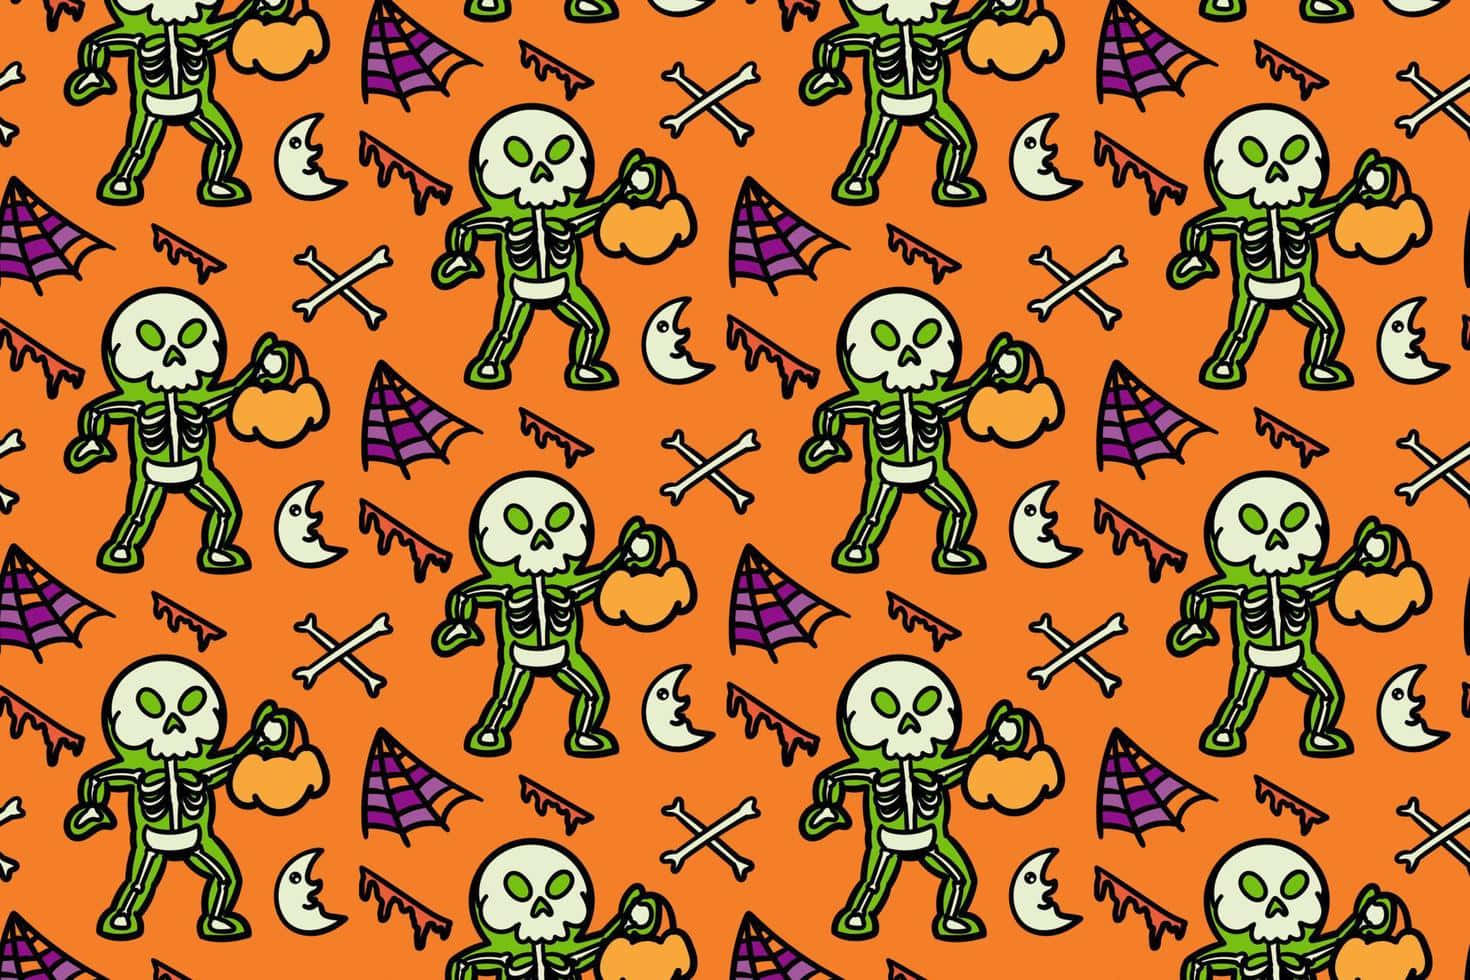 Dress up as a skeletal figure this Halloween! Wallpaper